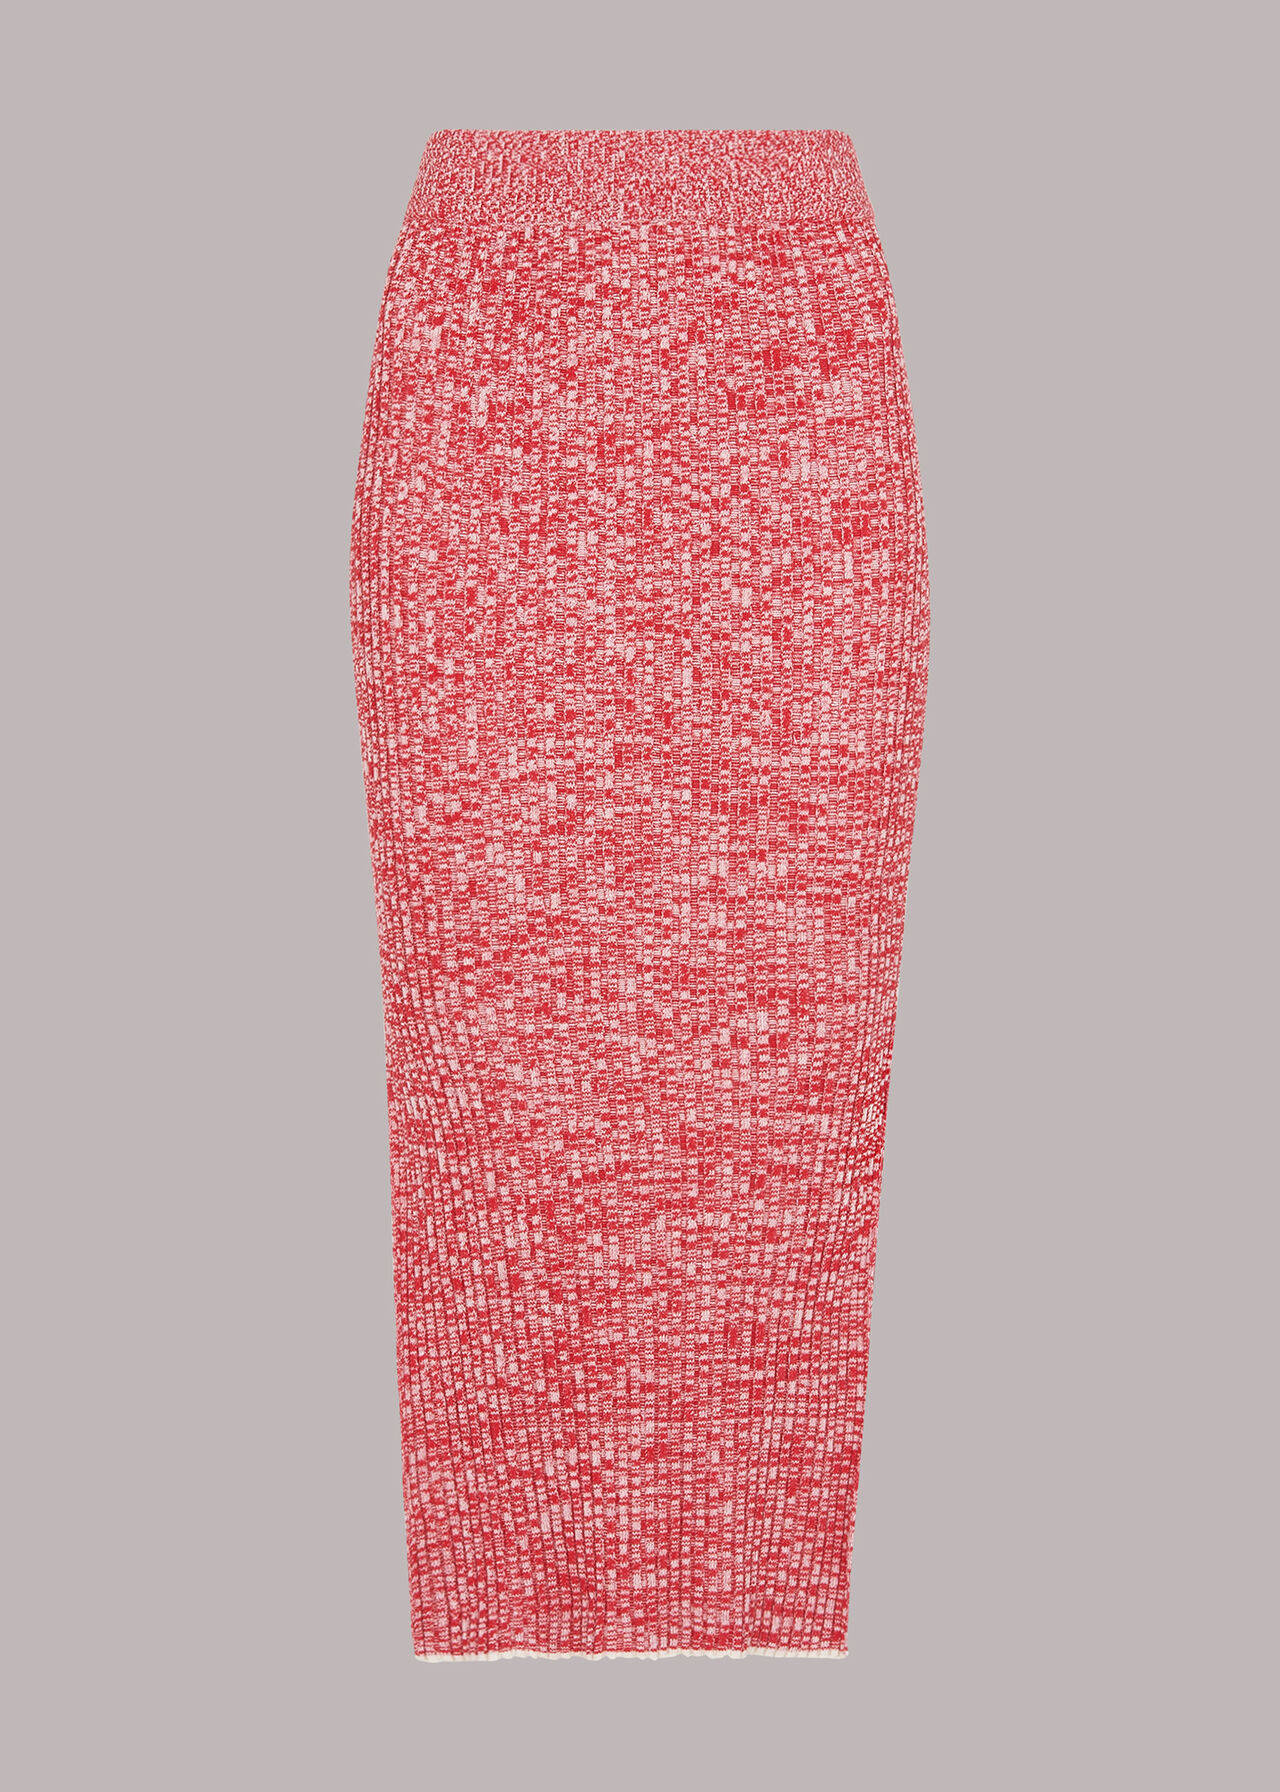 Flecked Rib Knit Skirt